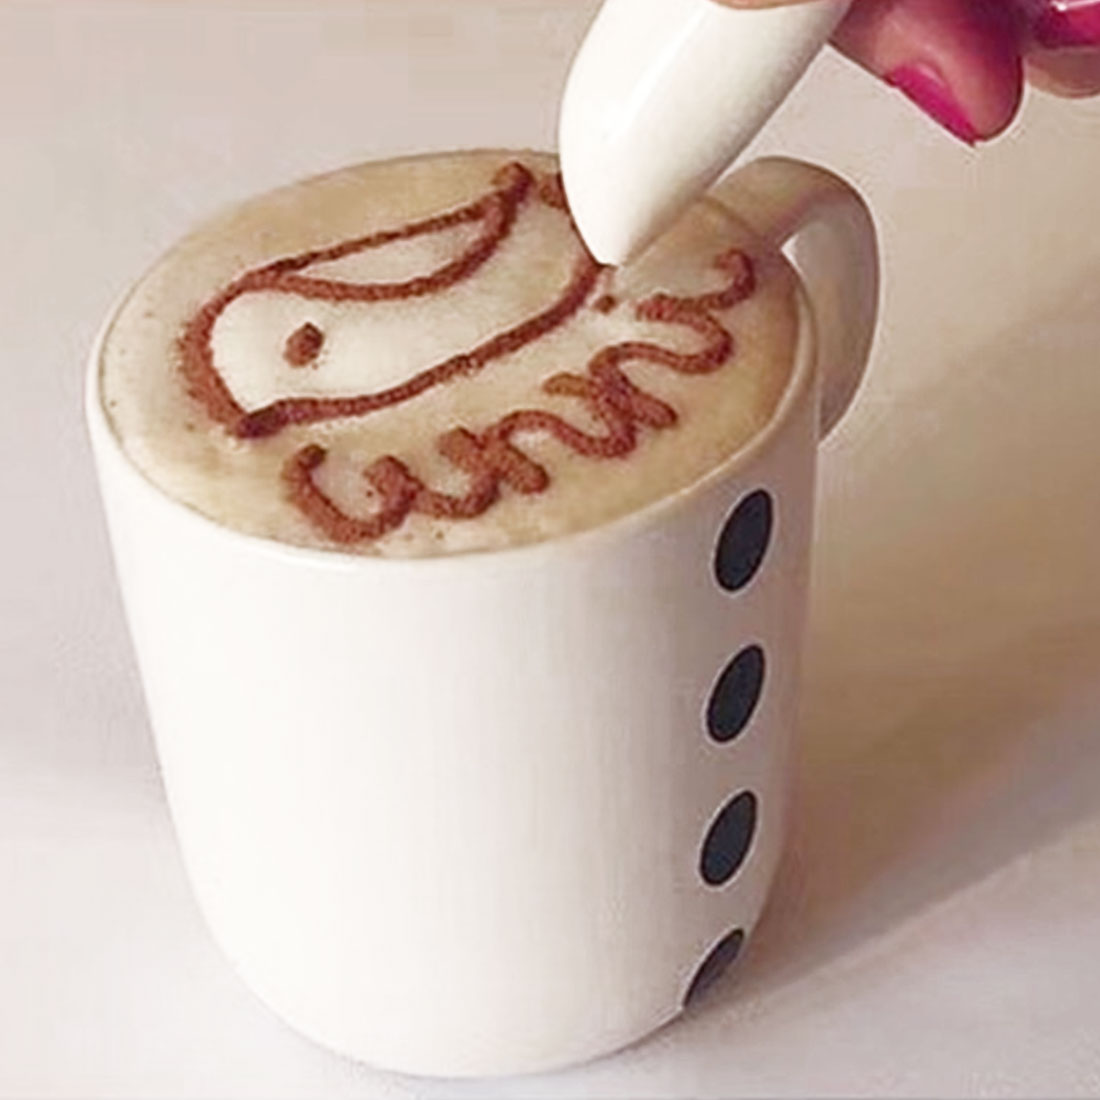 https://alitools.io/en/showcase/image?url=https%3A%2F%2Fae01.alicdn.com%2Fkf%2FHTB1BjHgXyYrK1Rjy0Fdq6ACvVXaD%2FNew-Electrical-Baking-Latte-Art-Pen-Coffee-Carved-Pen-Spice-Pen-For-Coffee-Cake-Hot-Selling.jpg